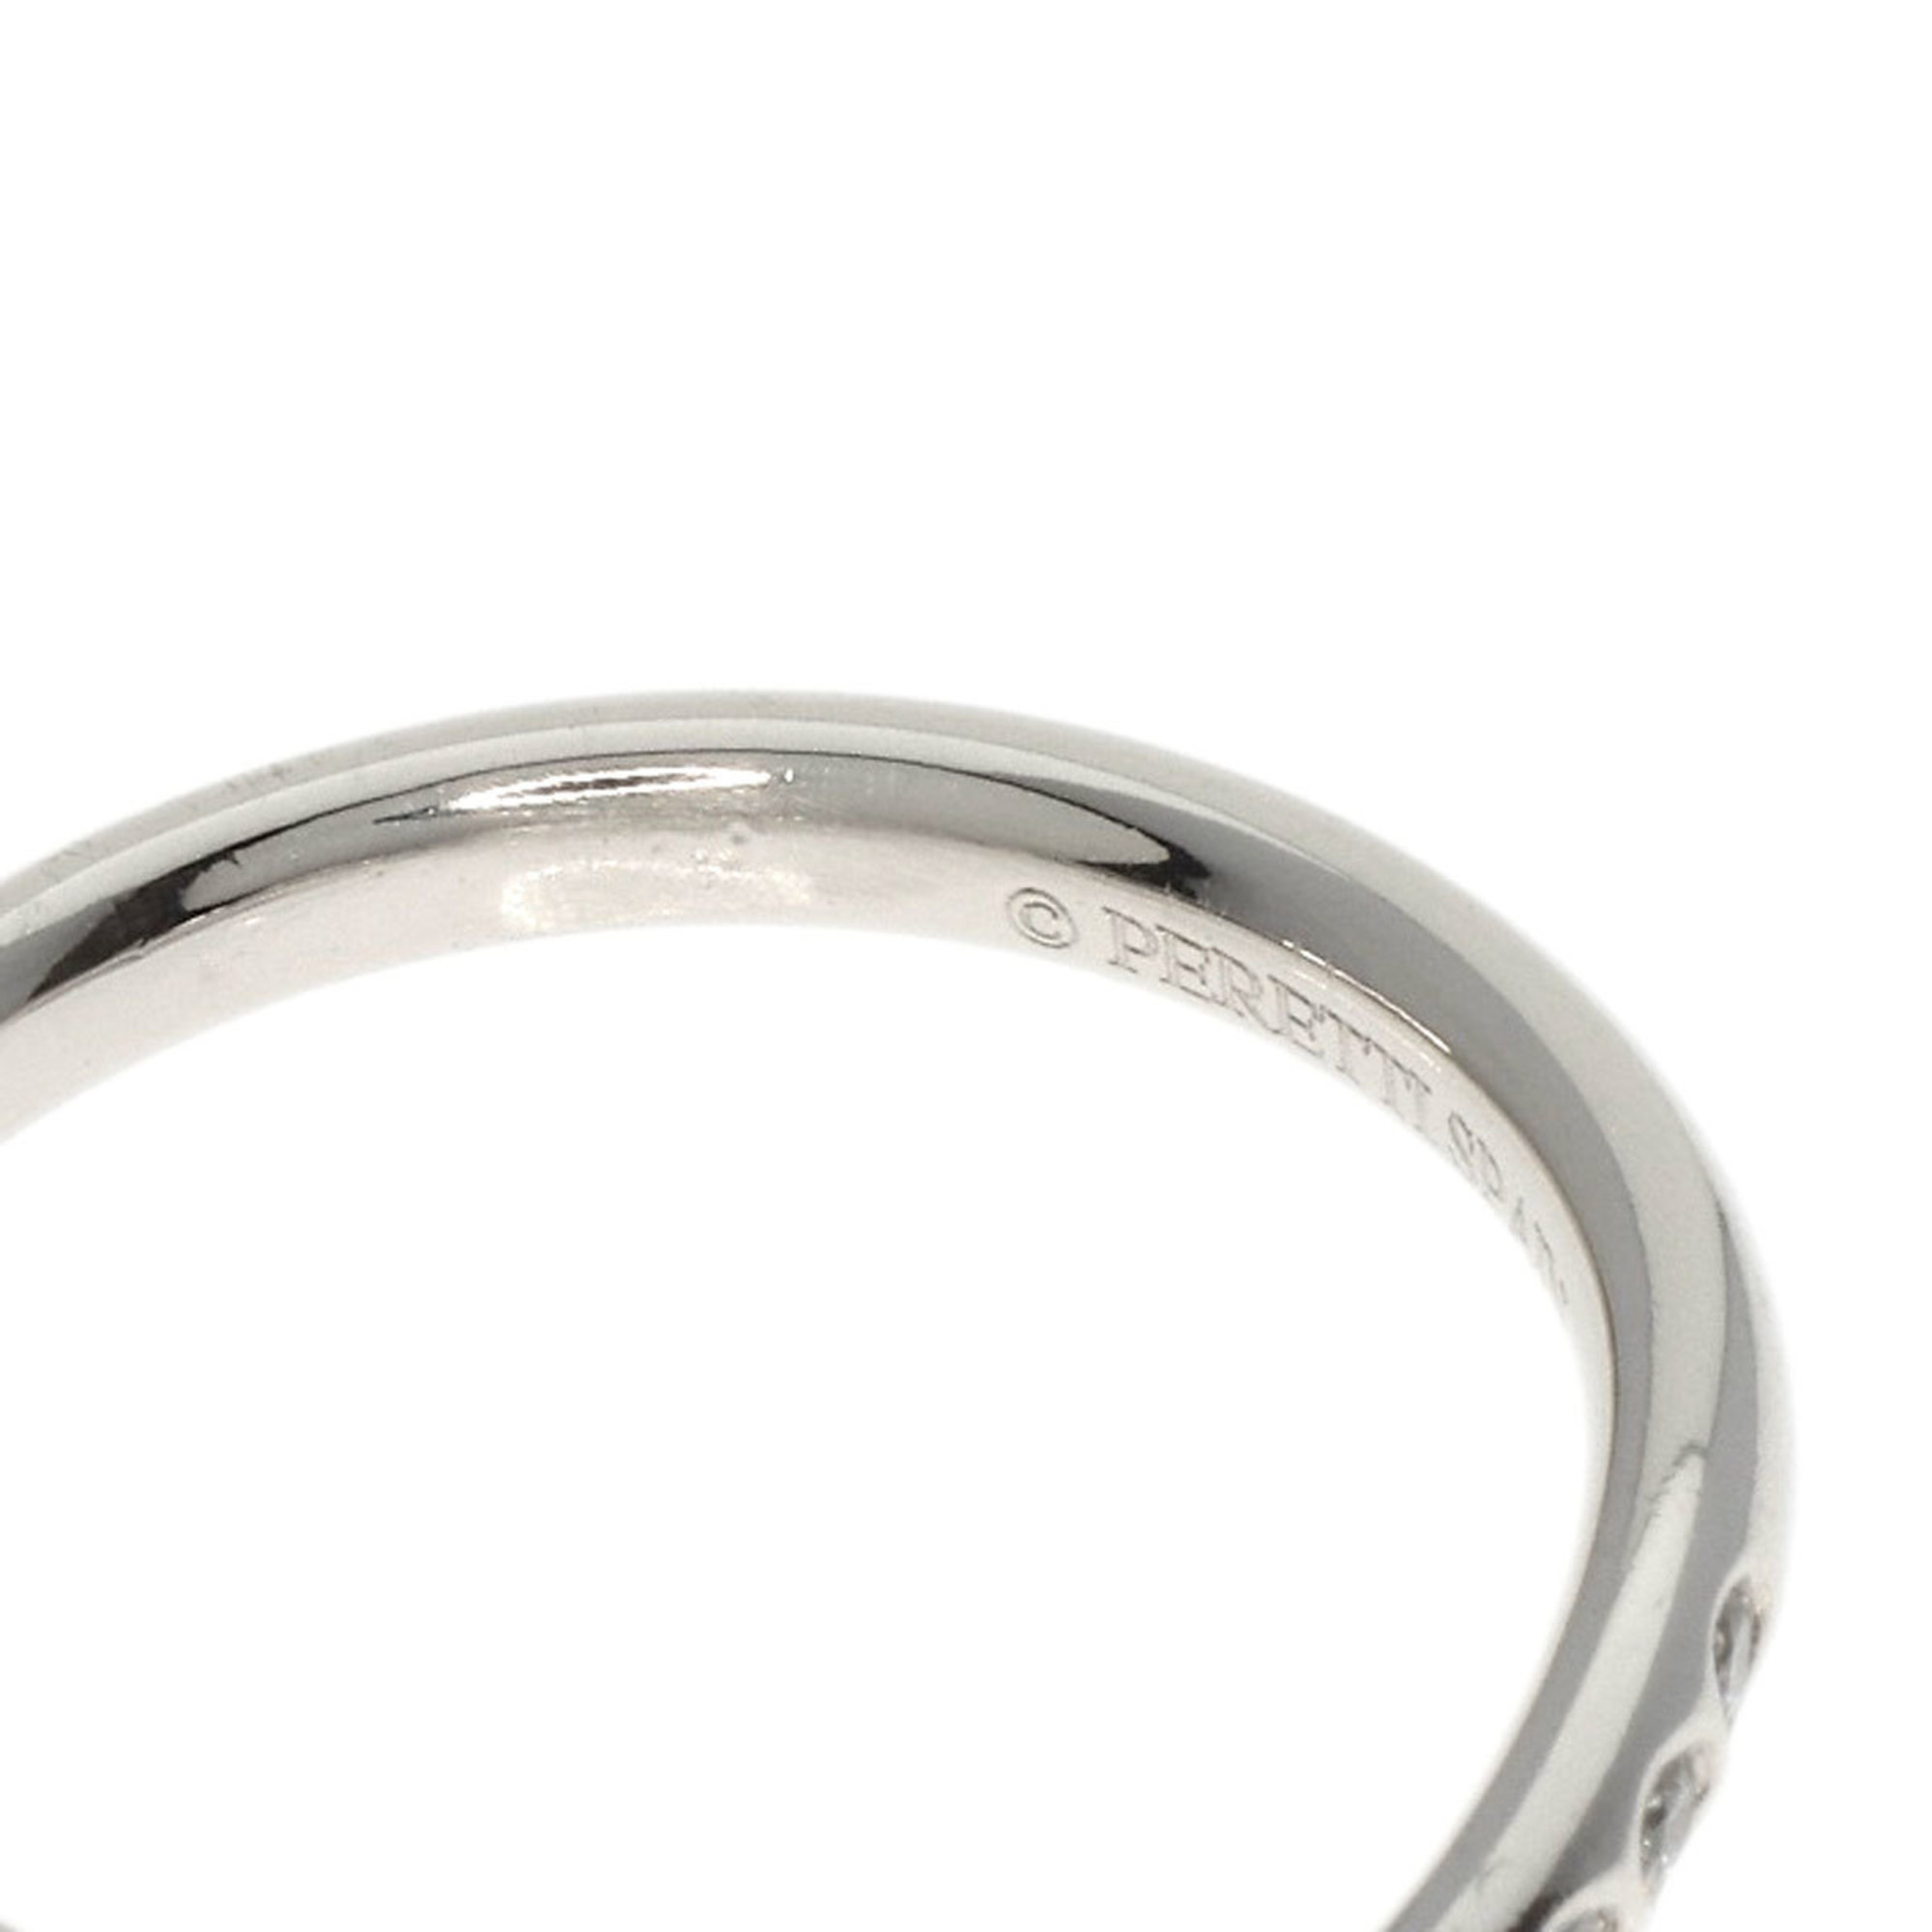 Tiffany & Co. Curved Band Diamond Ring, Platinum PT950, Women's, TIFFANY